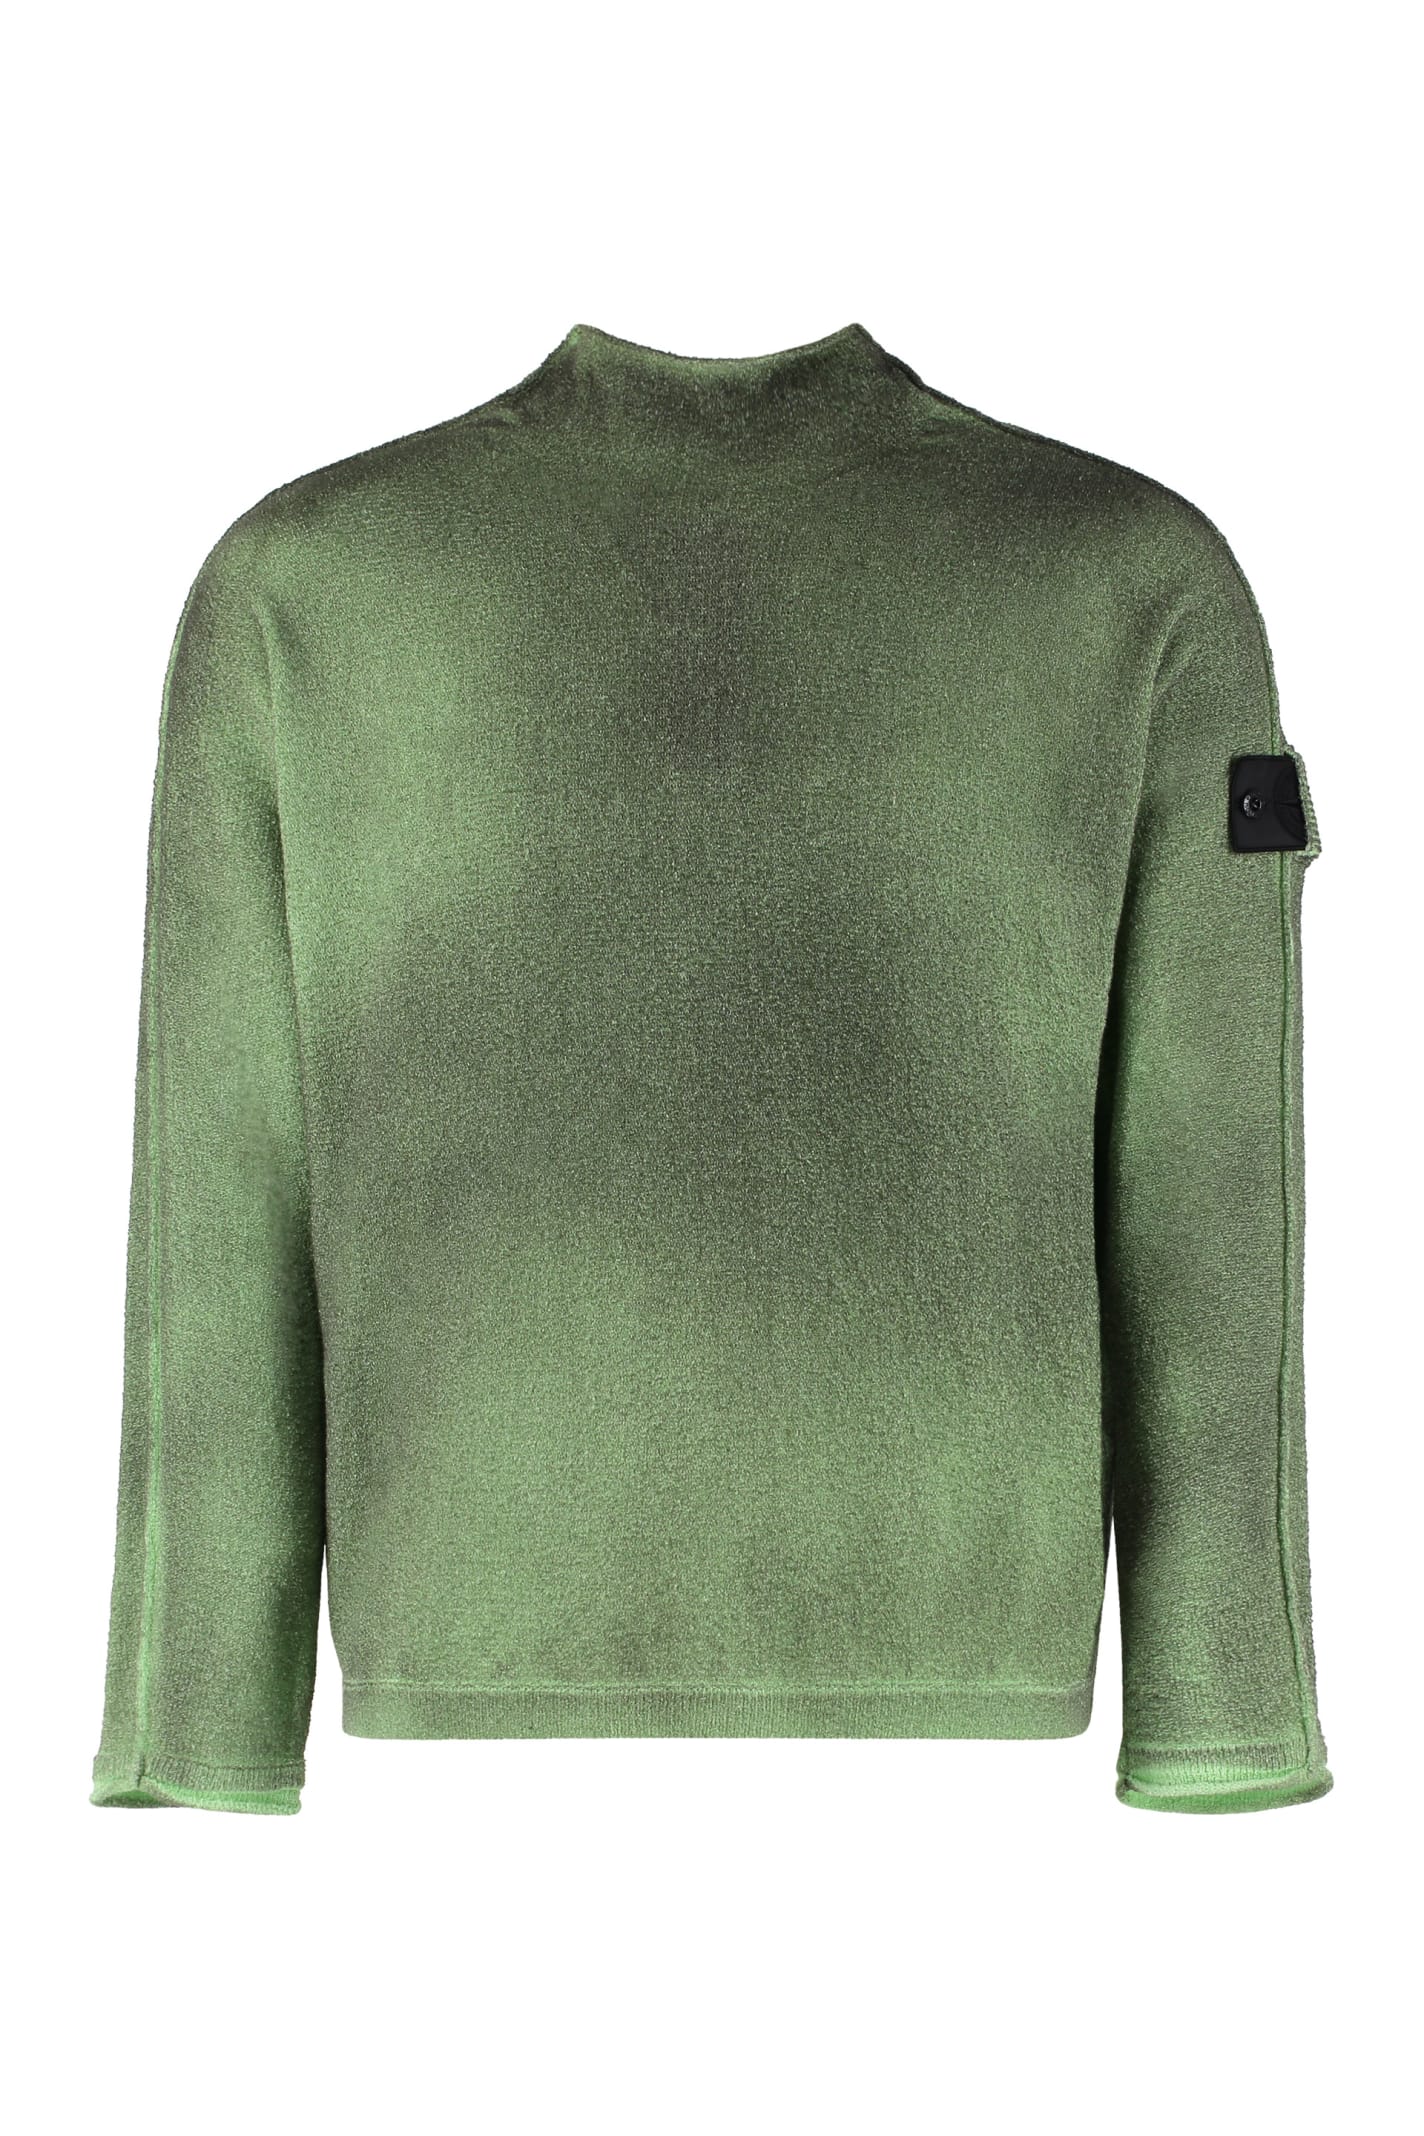 Stone Island Shadow Project Cotton-nylon Blend Sweater